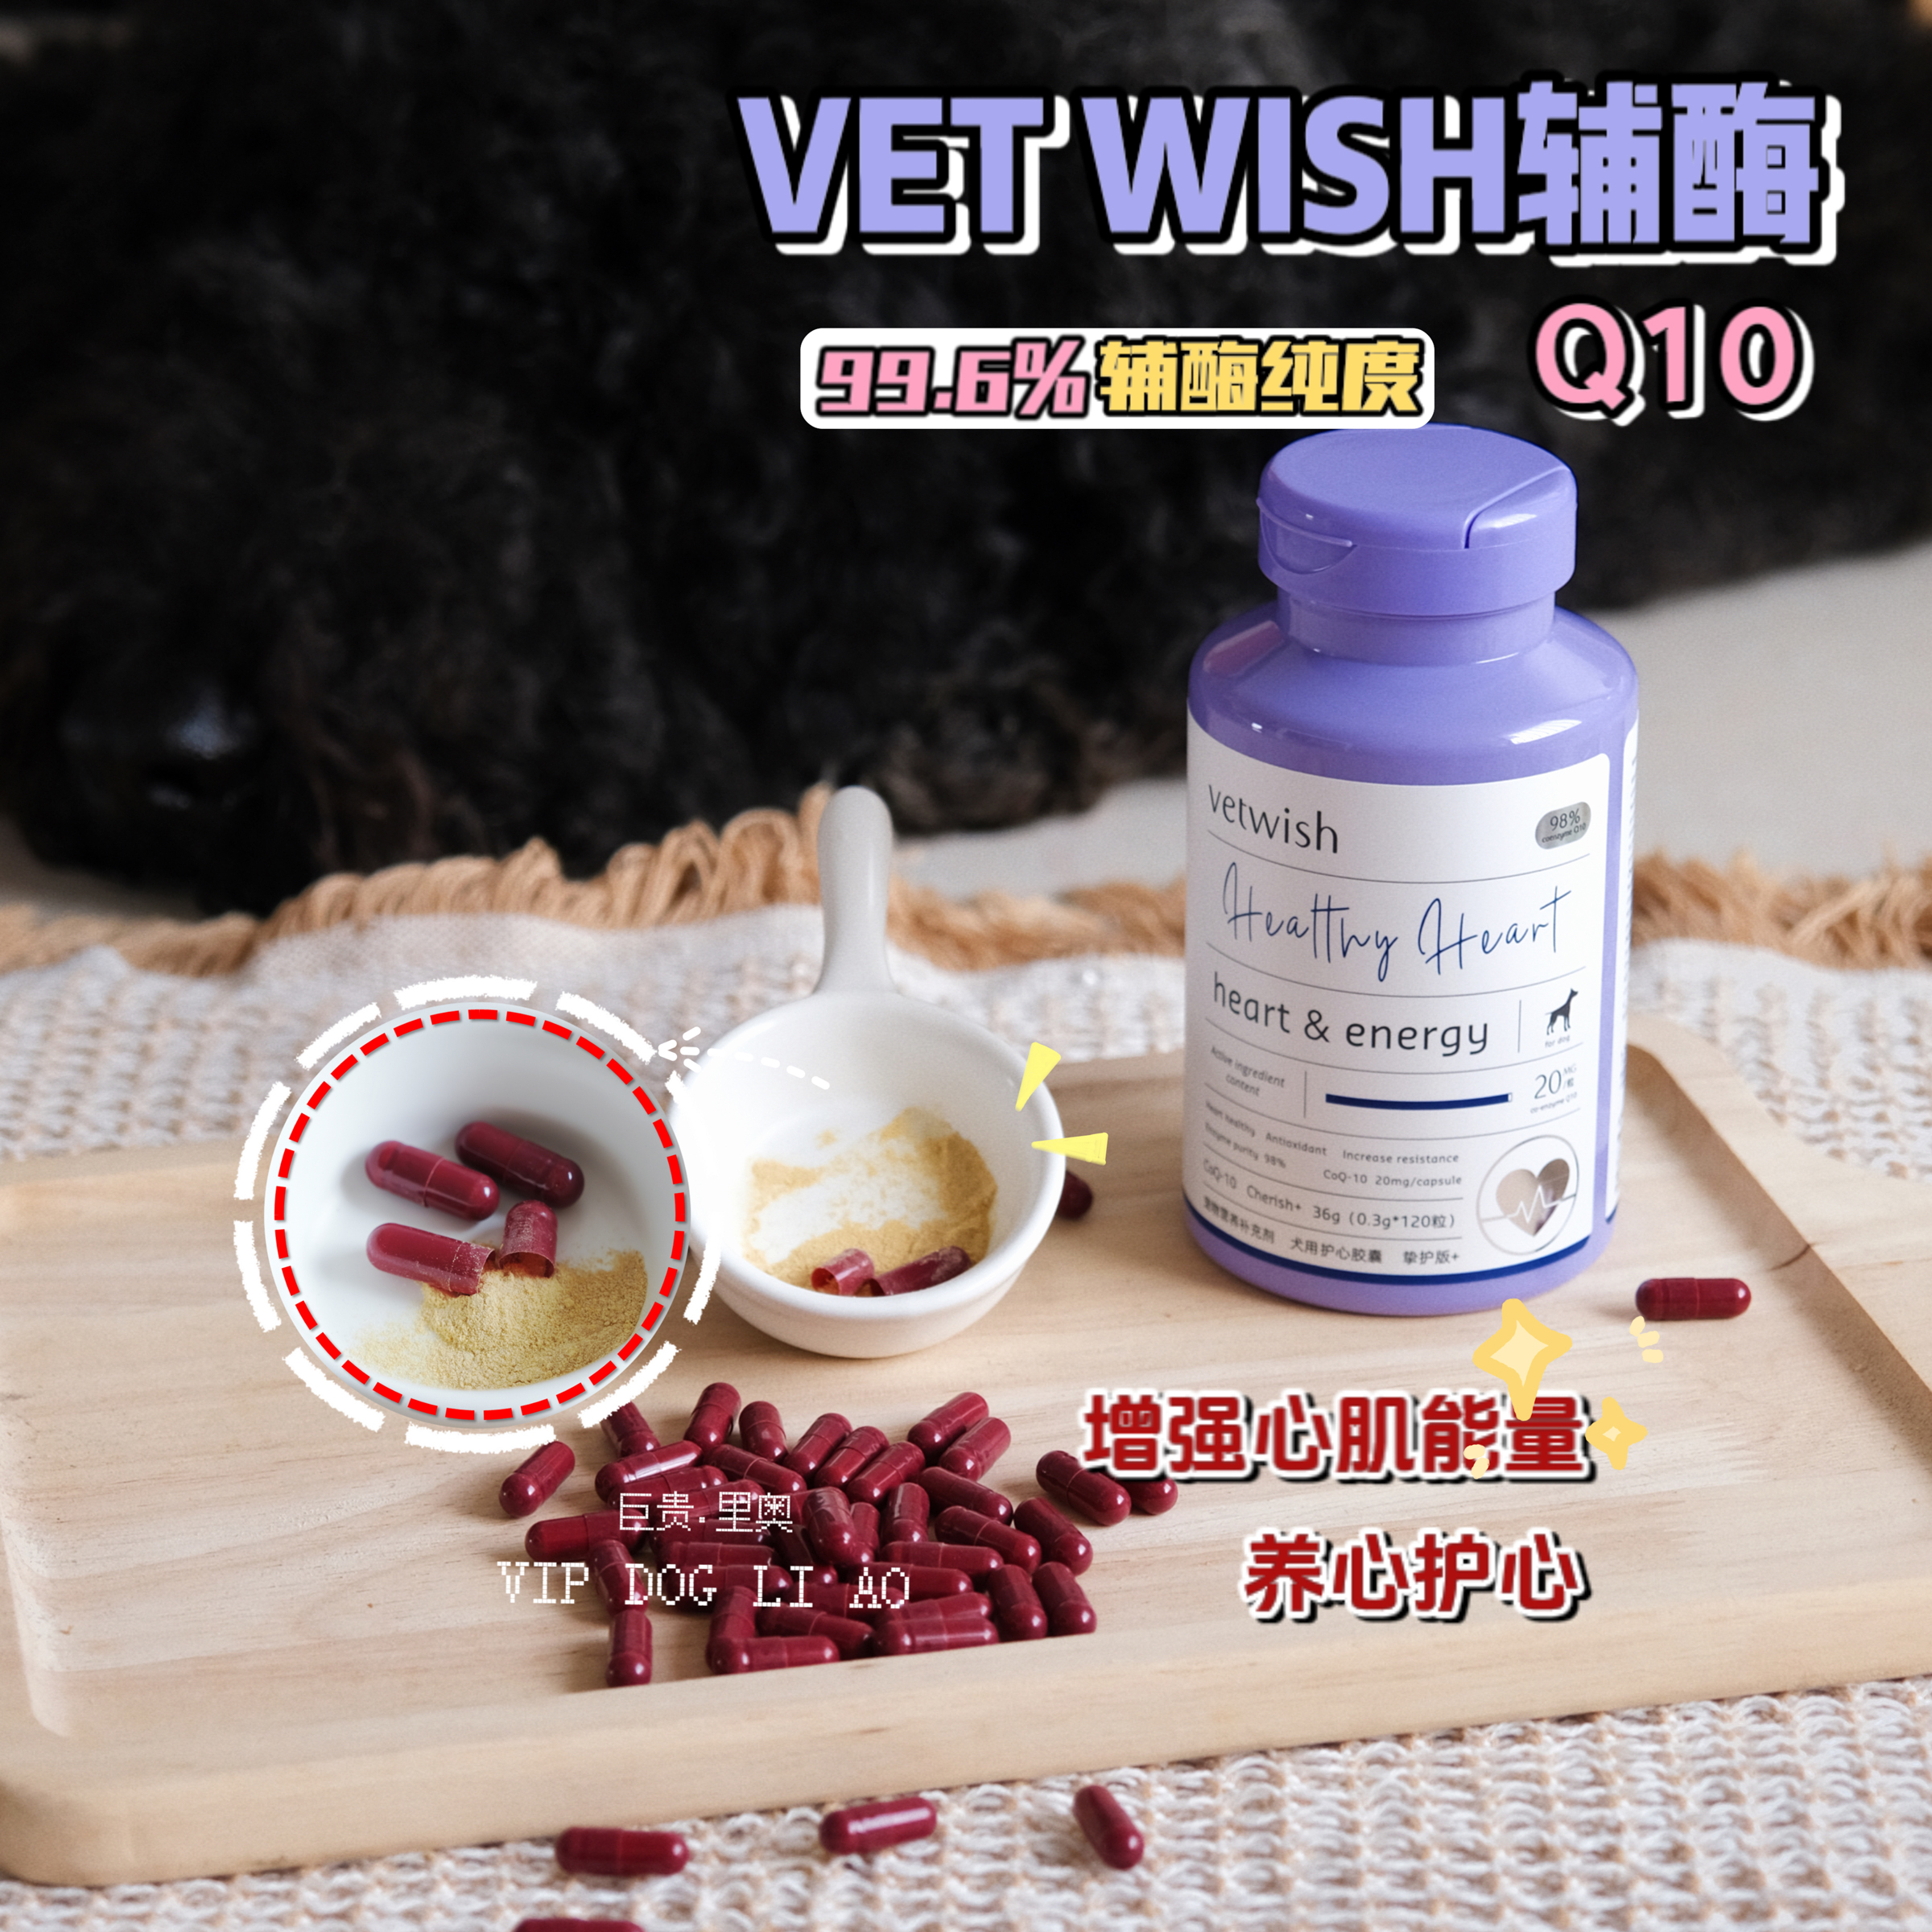 vetwish犬用辅酶Q10 增强心脏 保护老年犬狗狗活力营养保健品胶囊